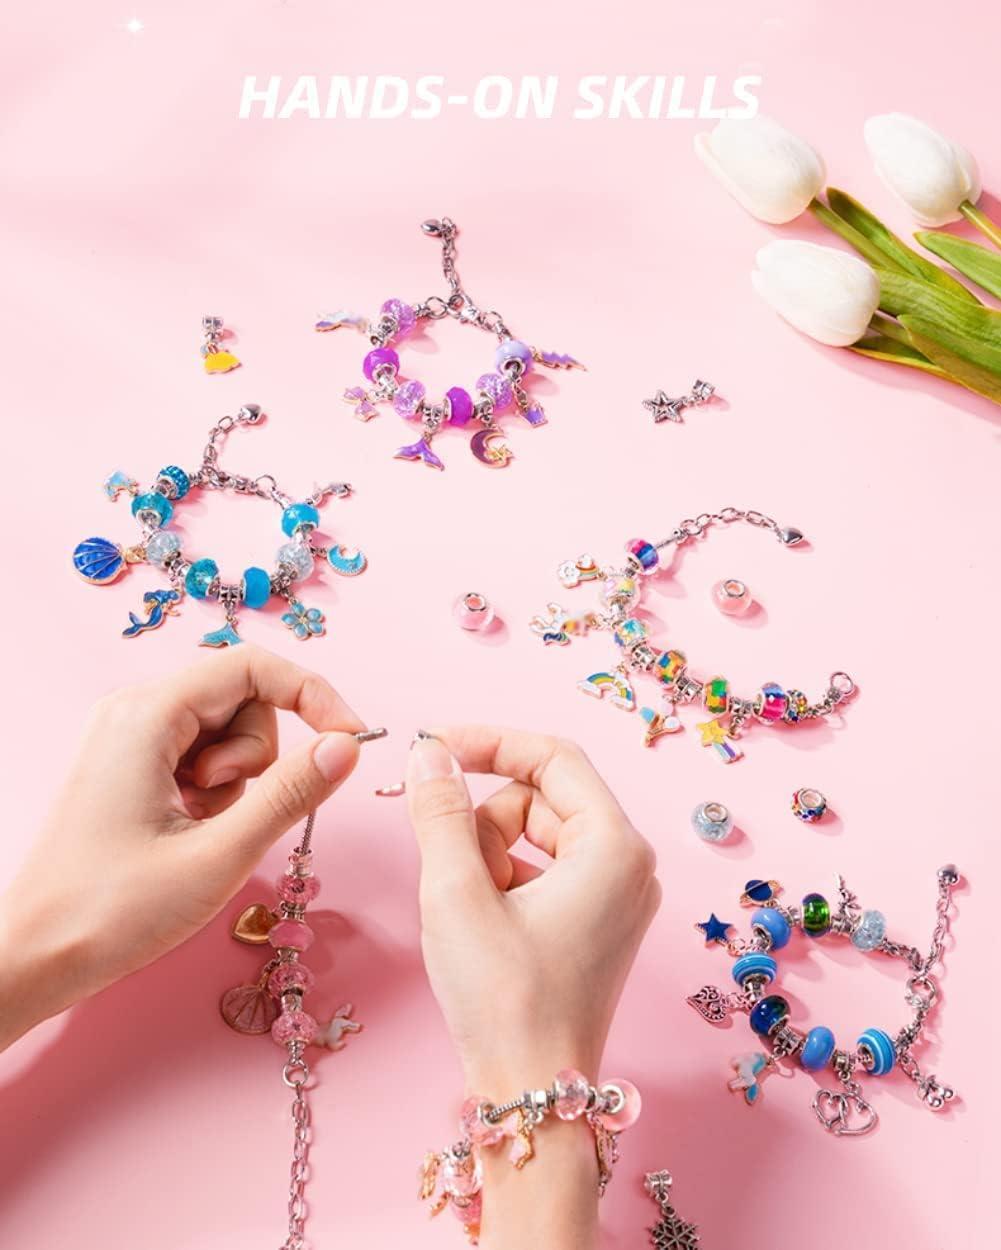 All Girls' Bracelets Accessories: Handbags, Jewelry & More